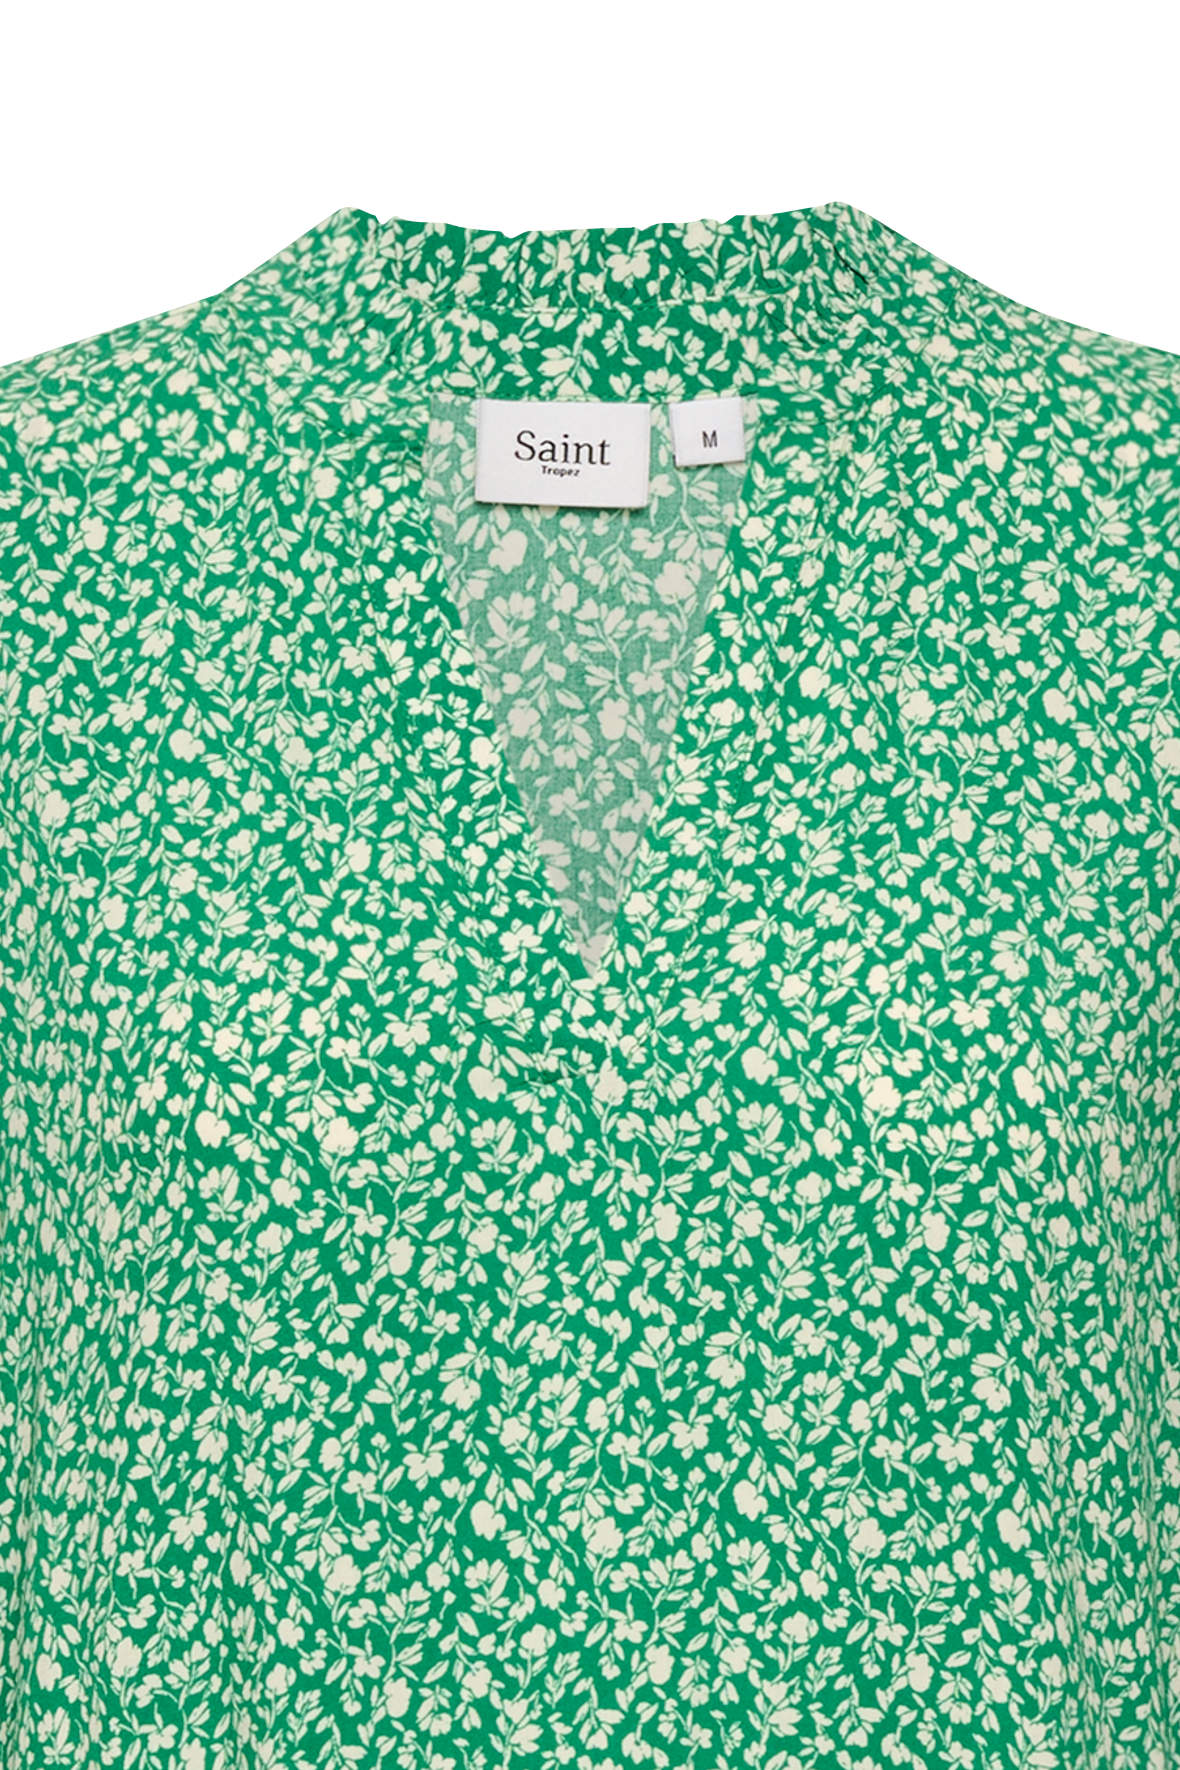 Saint Tropez Hos Dress - flagrende - Lohse grøn sommerkjole & snit -løst smuk